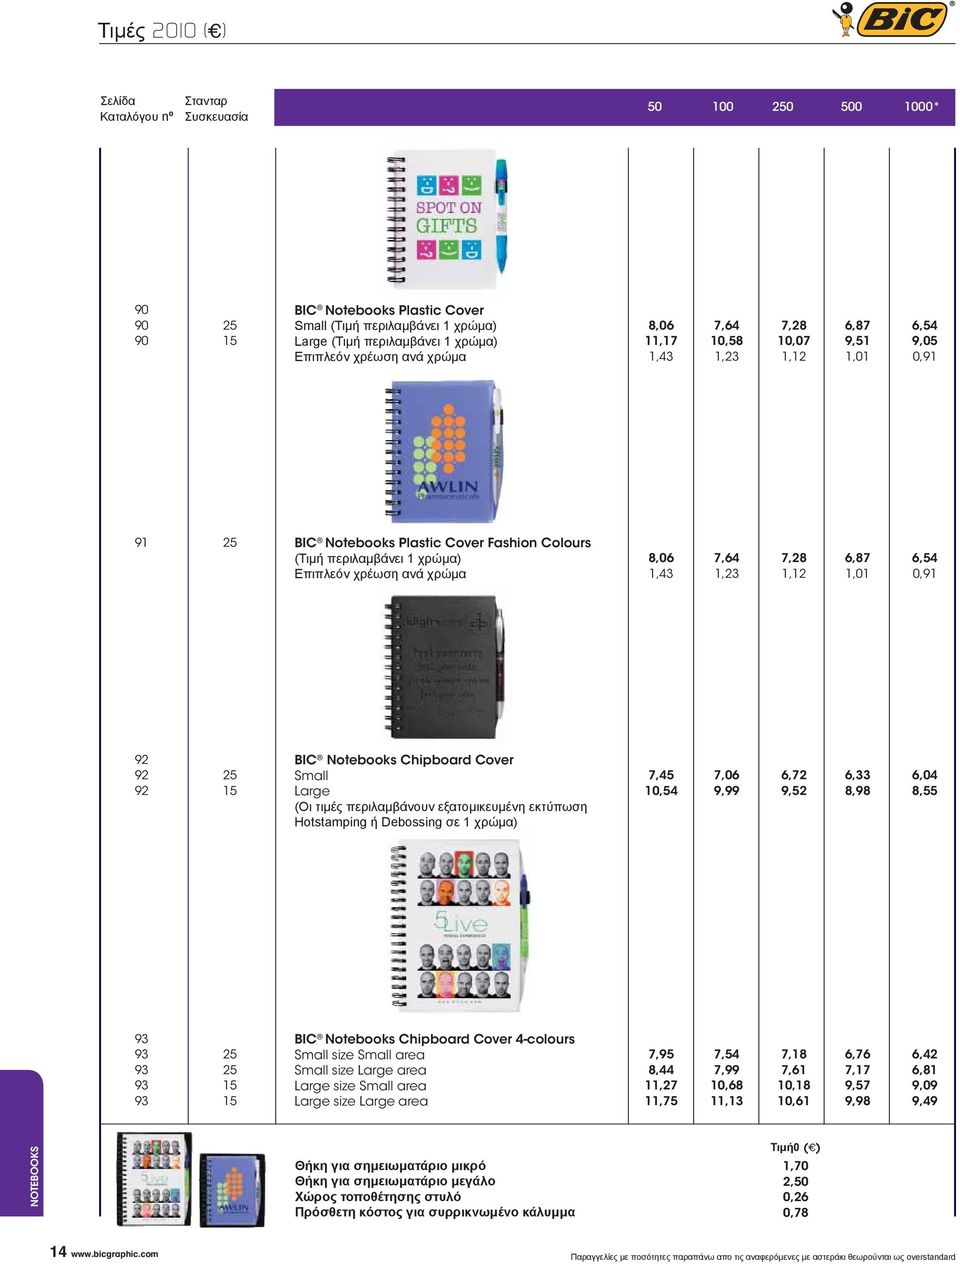 Notebooks Chipboard Cover Small Large (Οι τιμές περιλαμβάνουν εξατομικευμένη εκτύπωση Hotstamping ή Debossing σε 1 χρώμα) 7,45 7,06 6,72 6,33 6,04 10,54 9,99 9,52 8,98 8,55 93 93 93 93 93 15 15 BIC